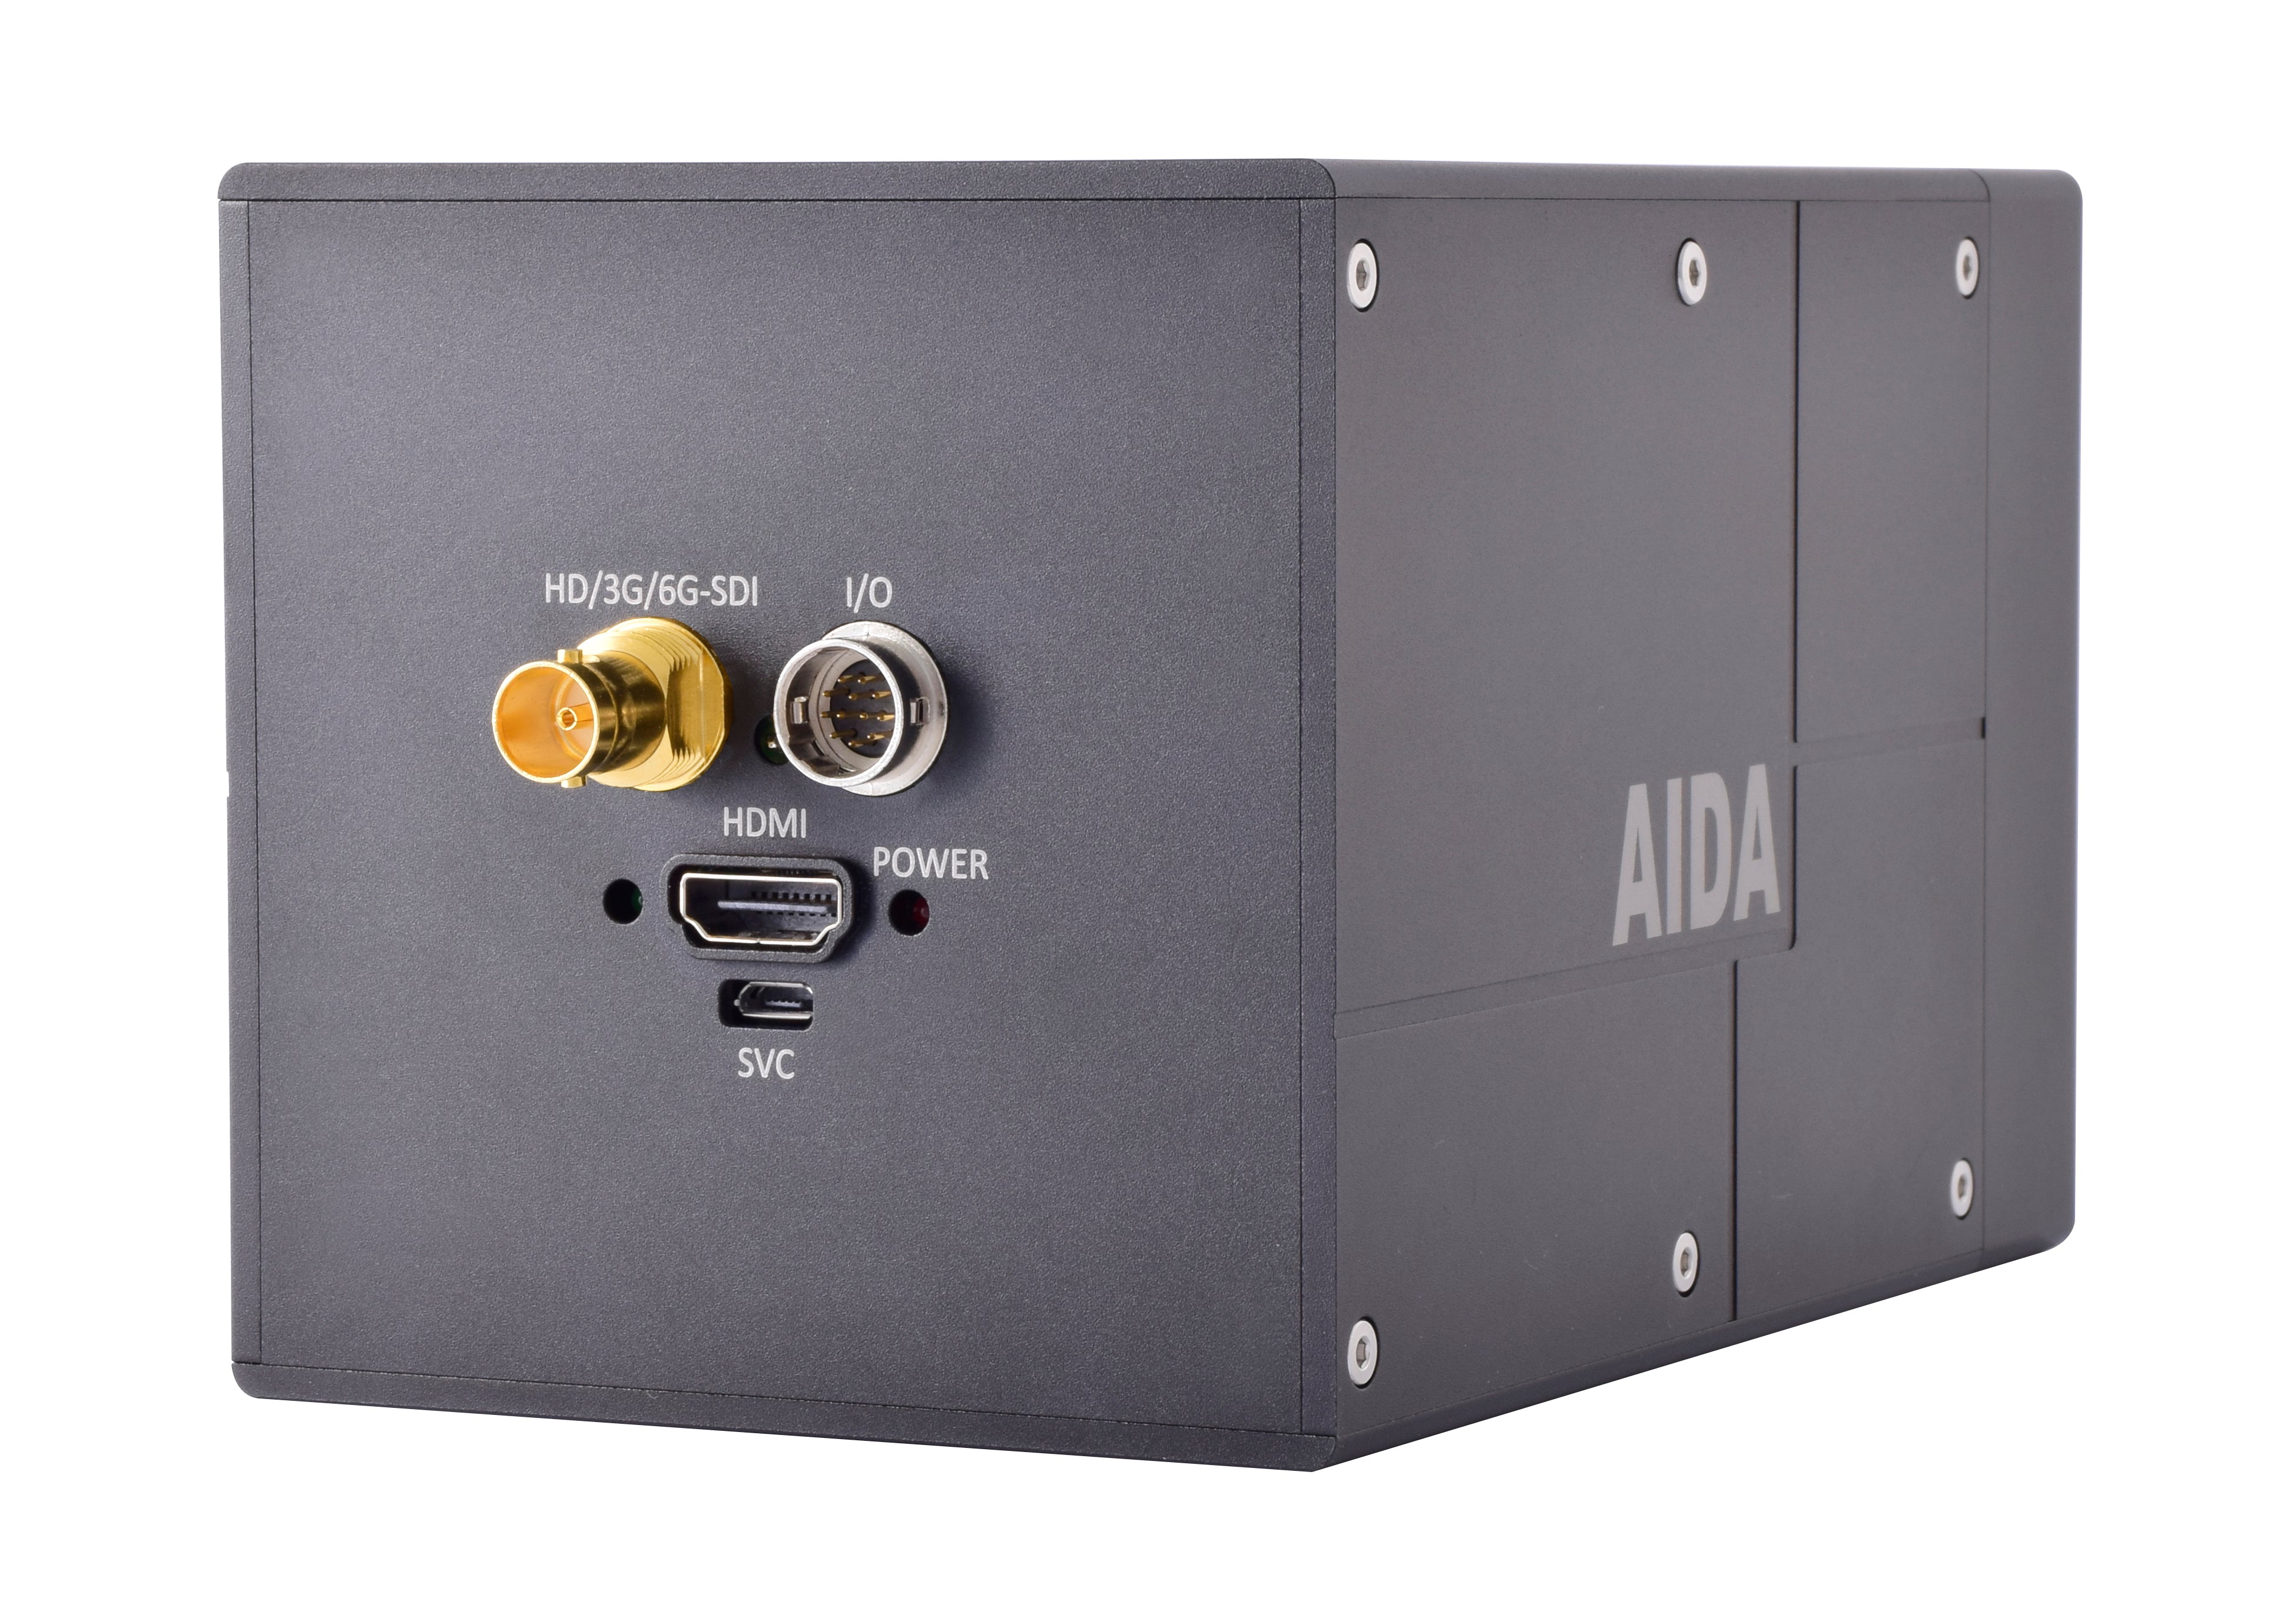 AIDA Imaging 4K/UHD 6G-SDI EFP Camera